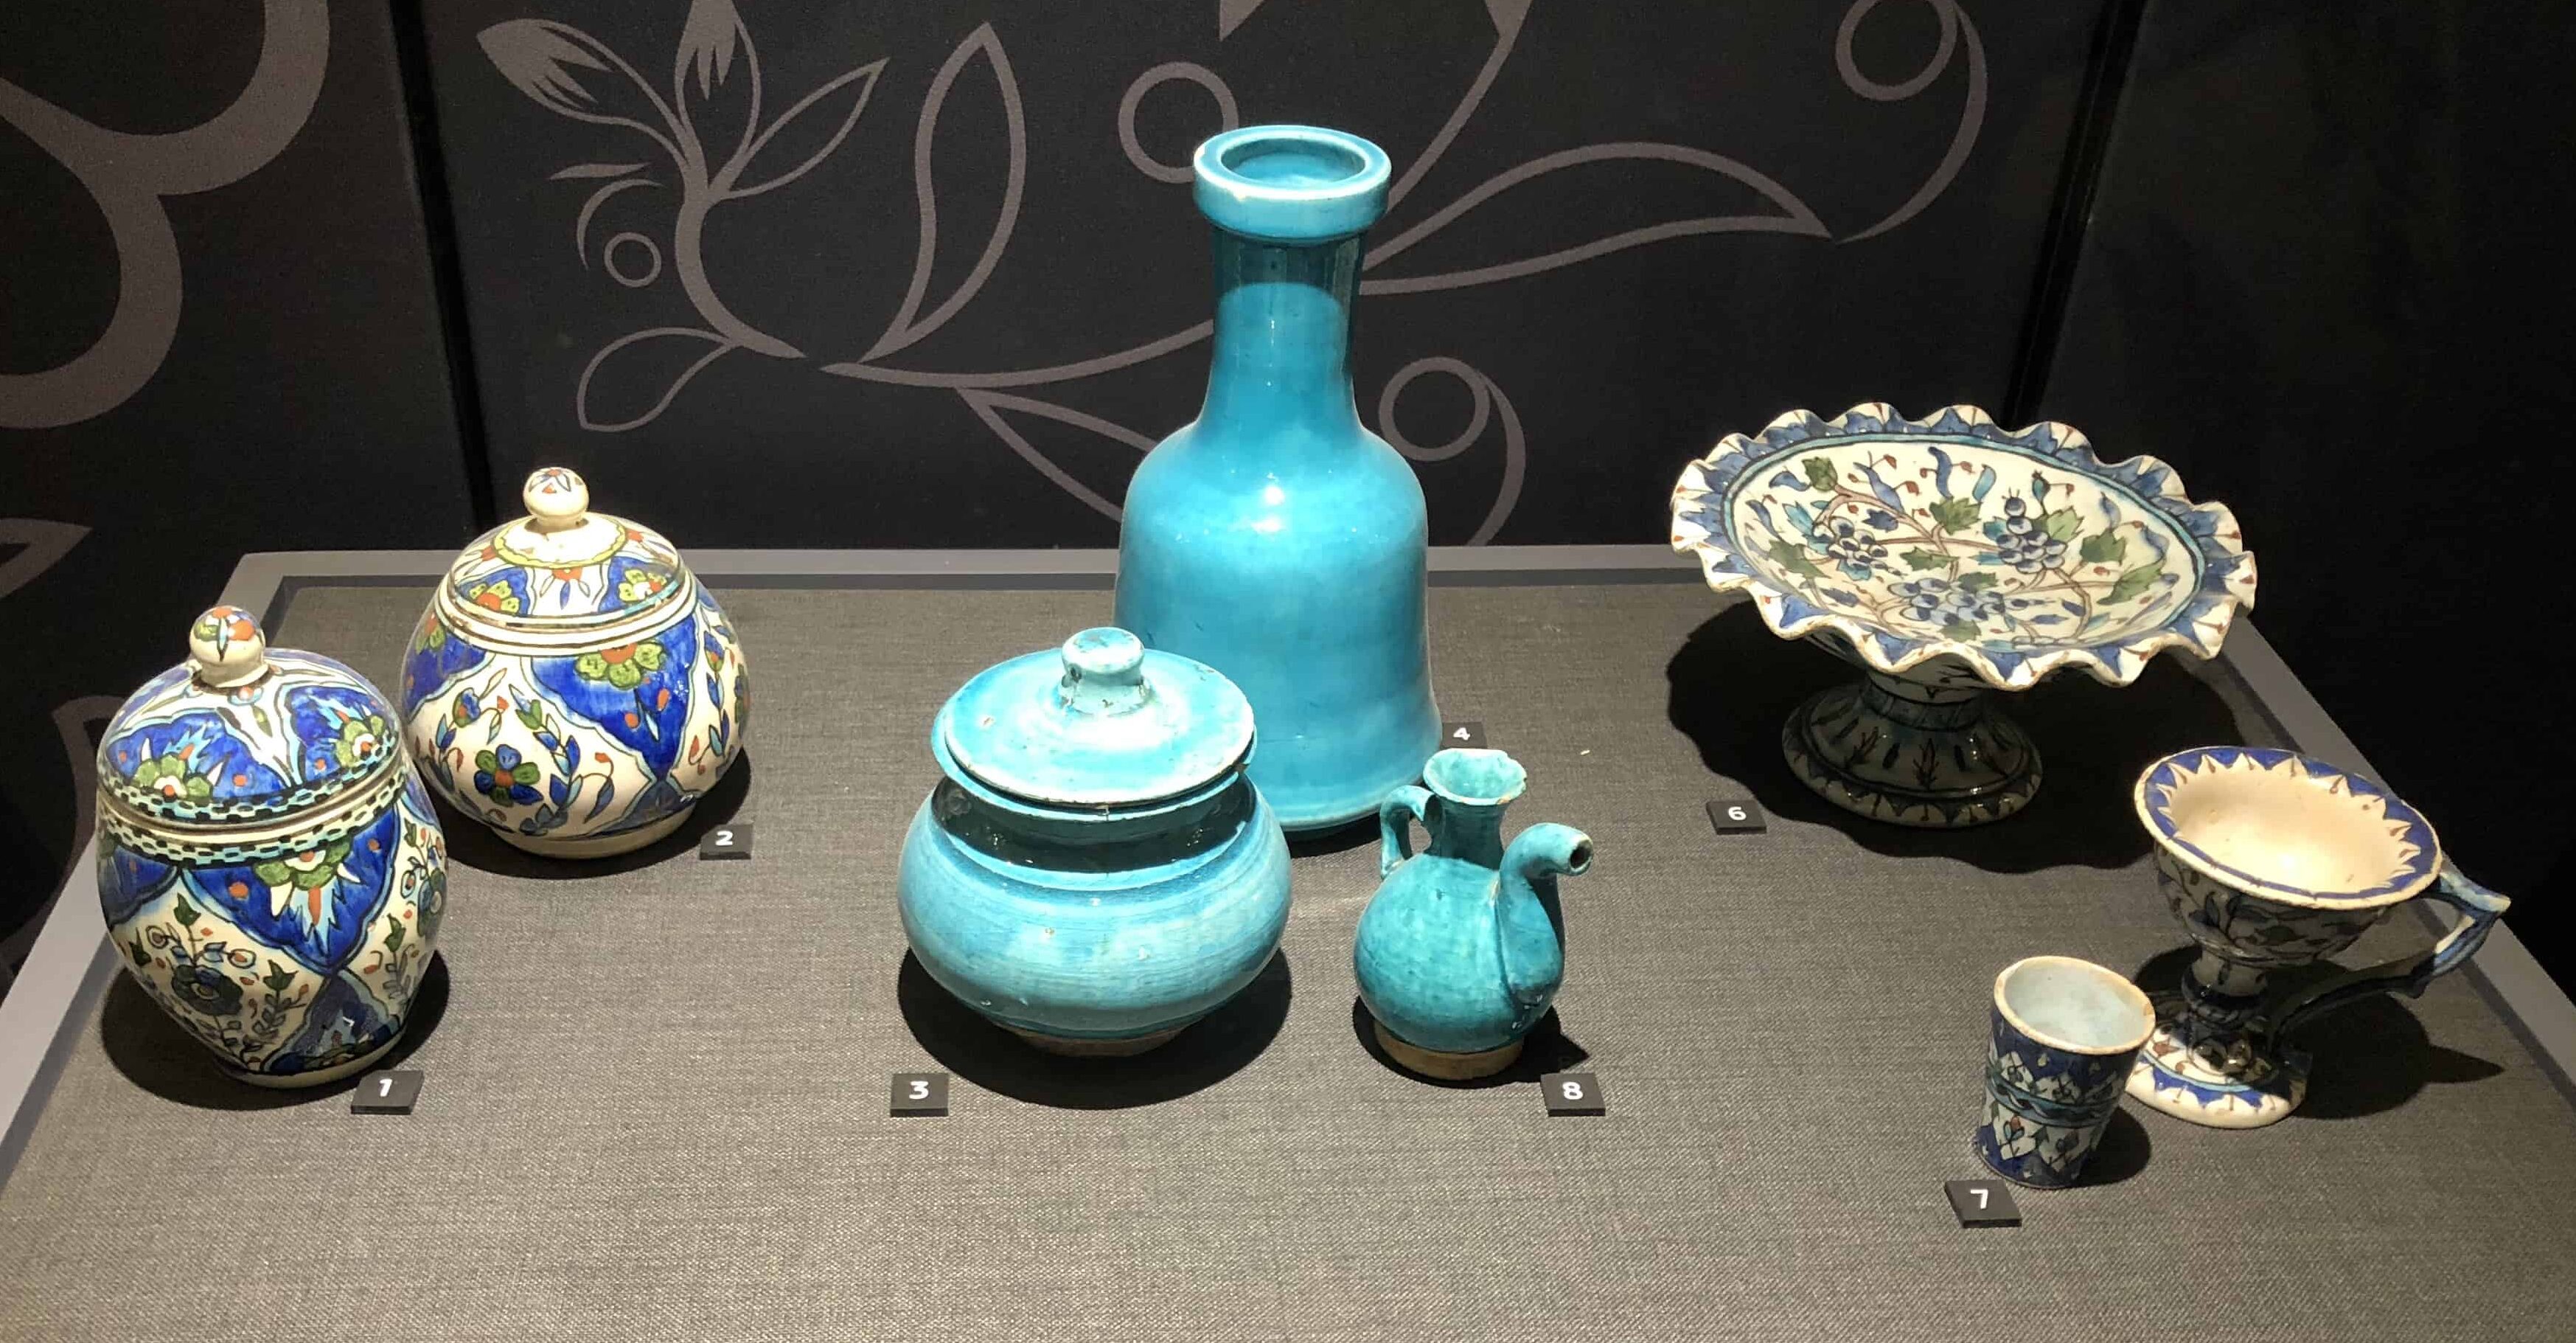 20th century Kütahya ceramics at the Pera Museum